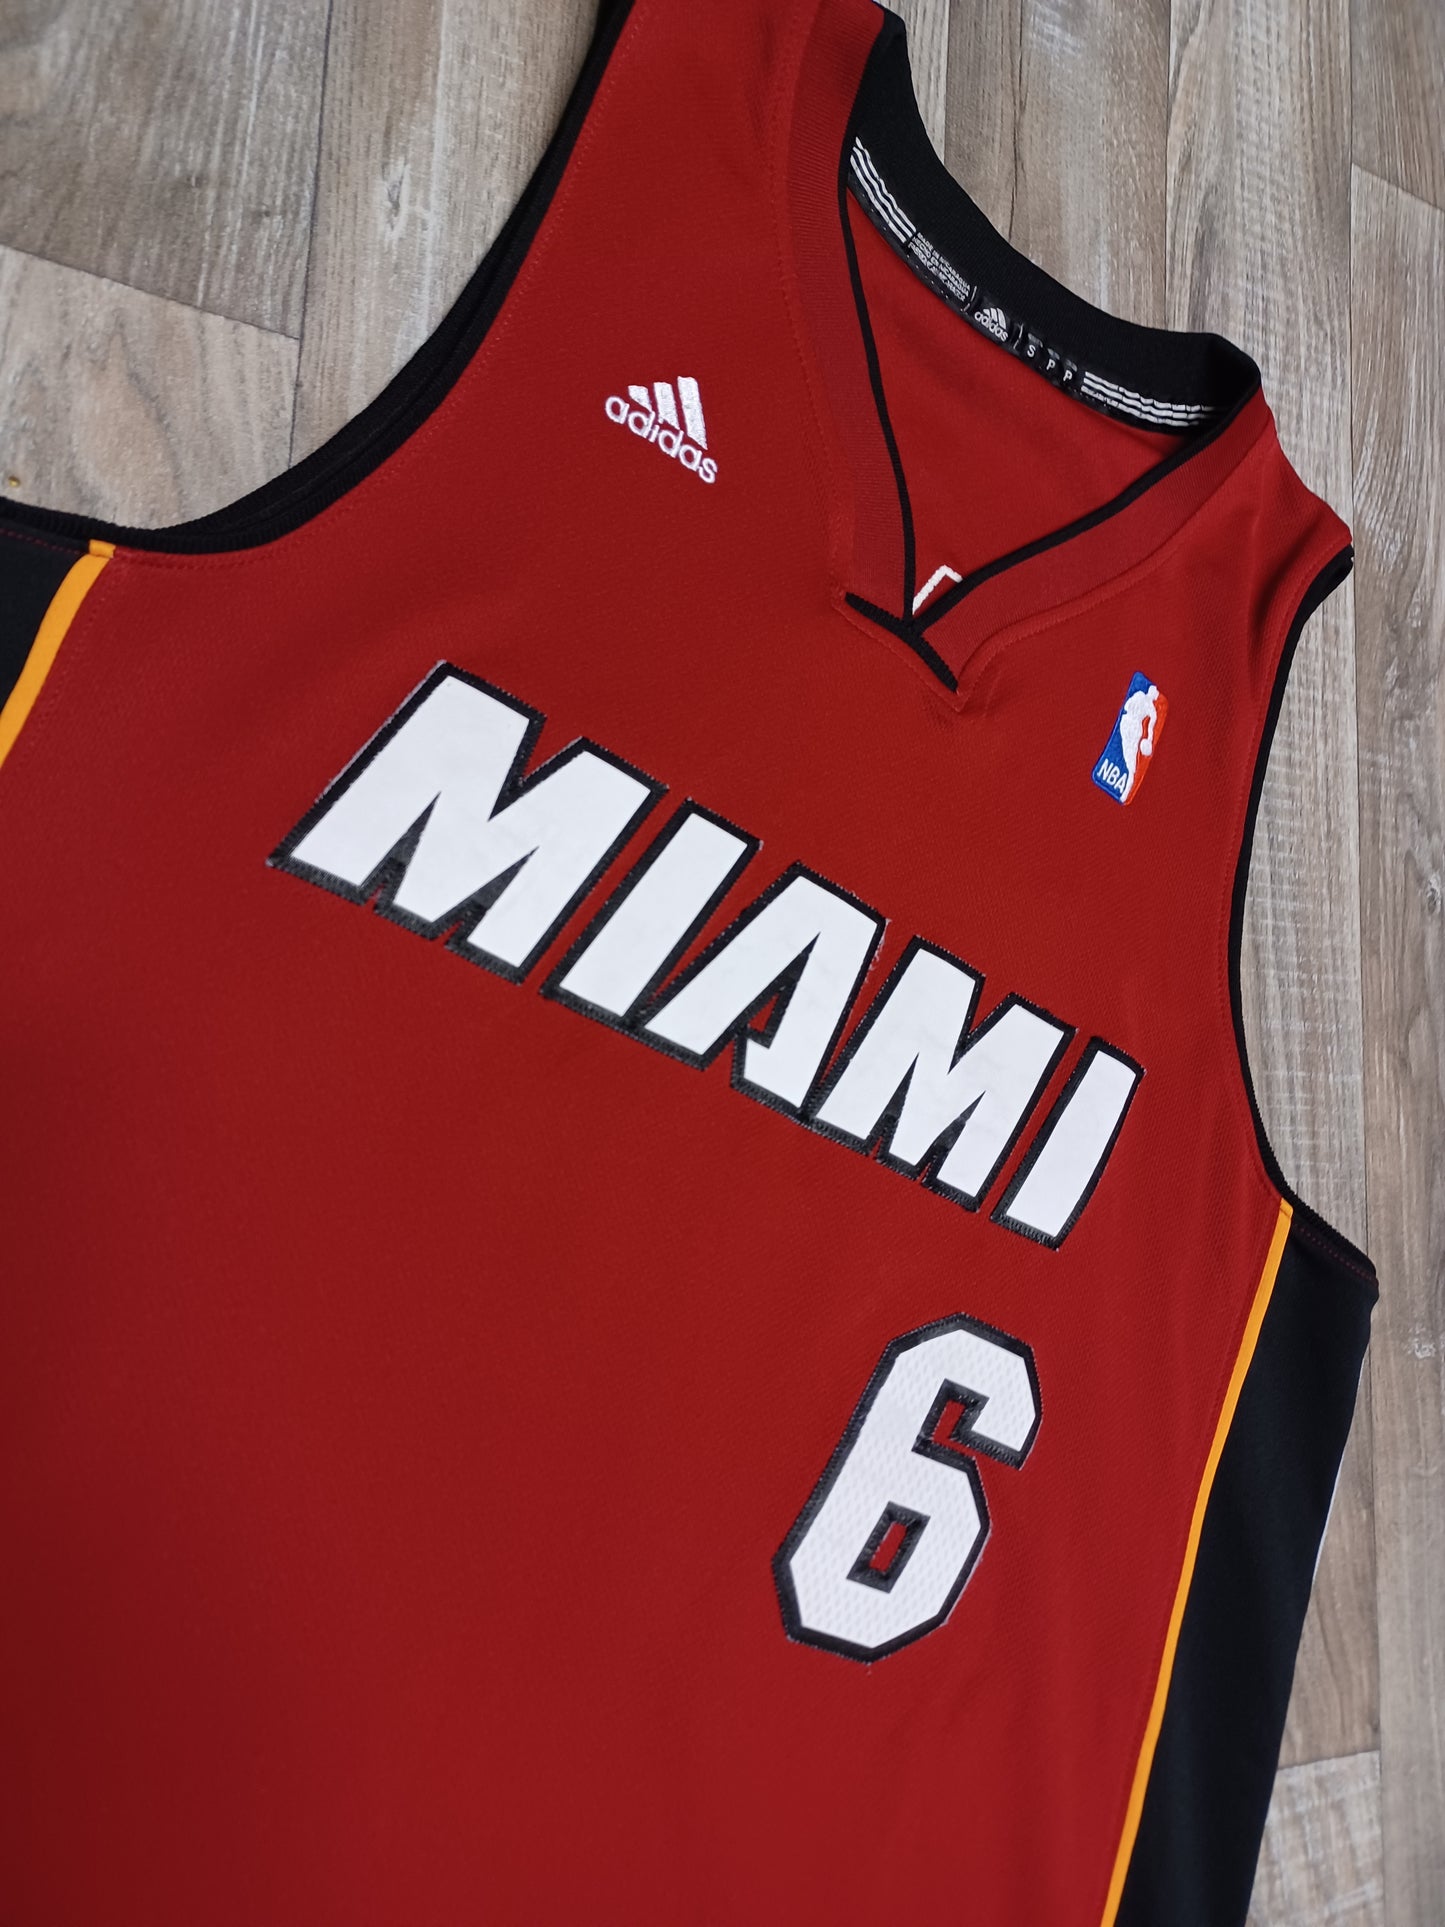 LeBron James Miami Heat Jersey Size Small